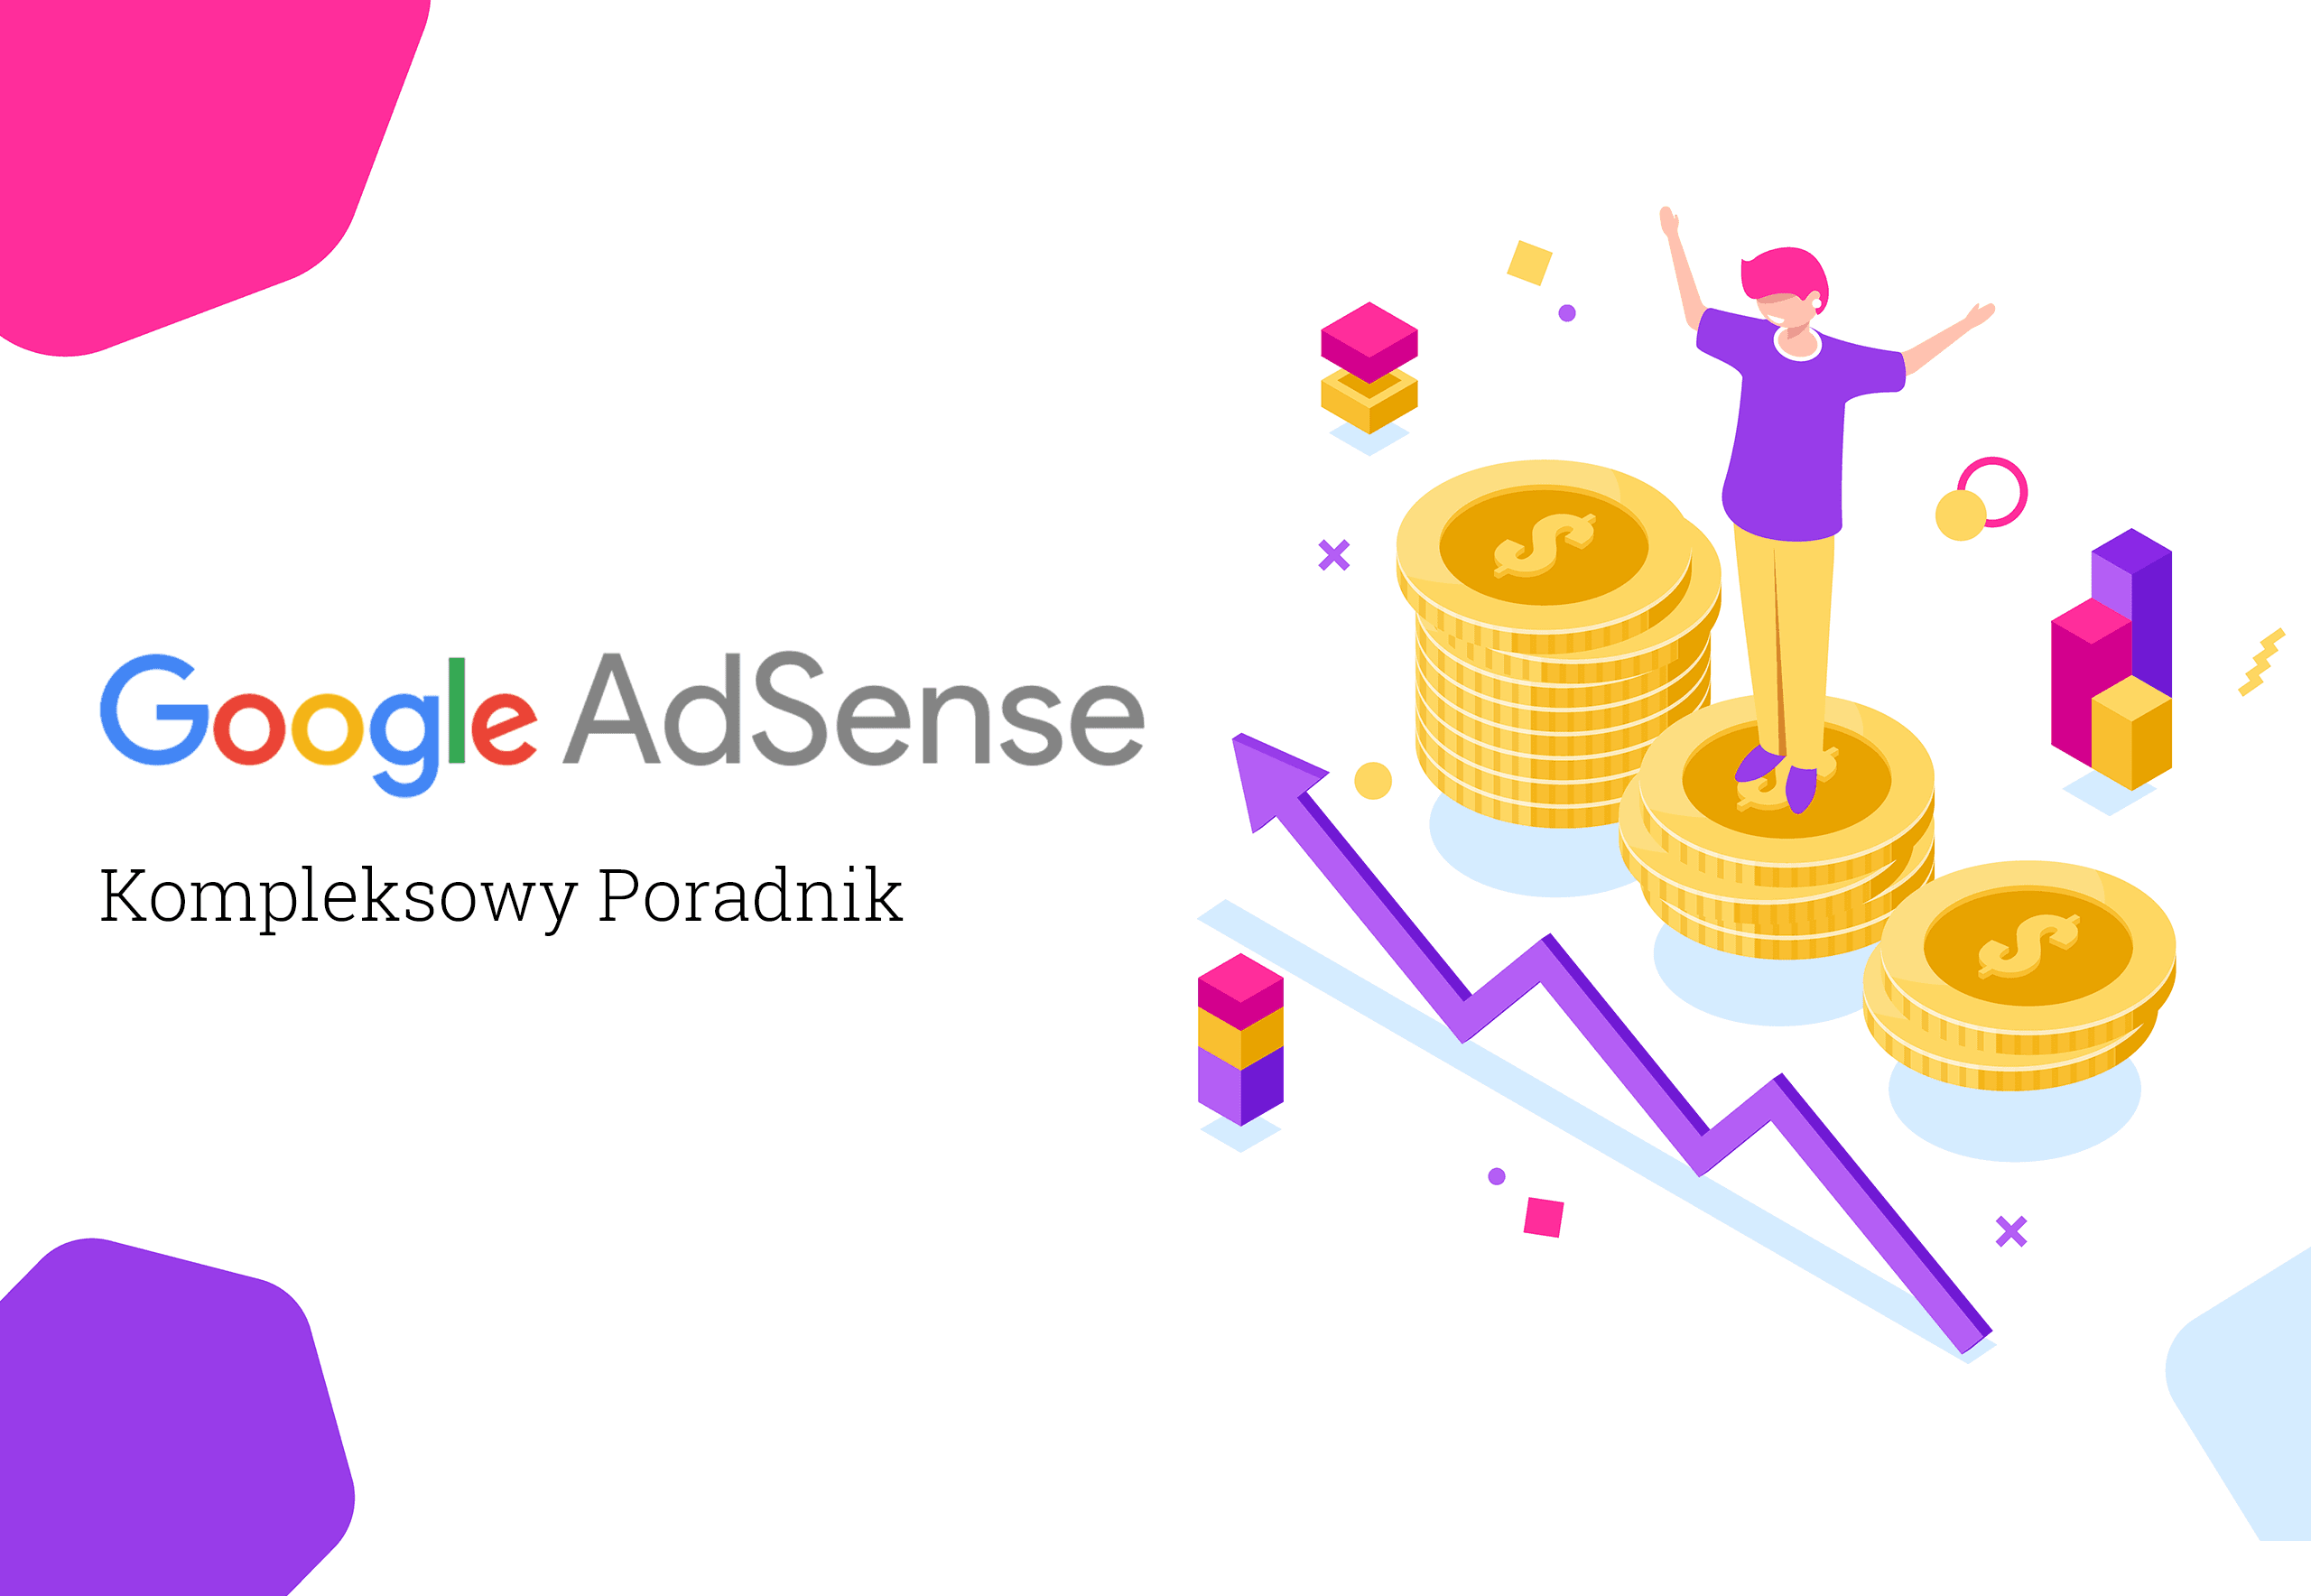 Google AdSense Poradnik